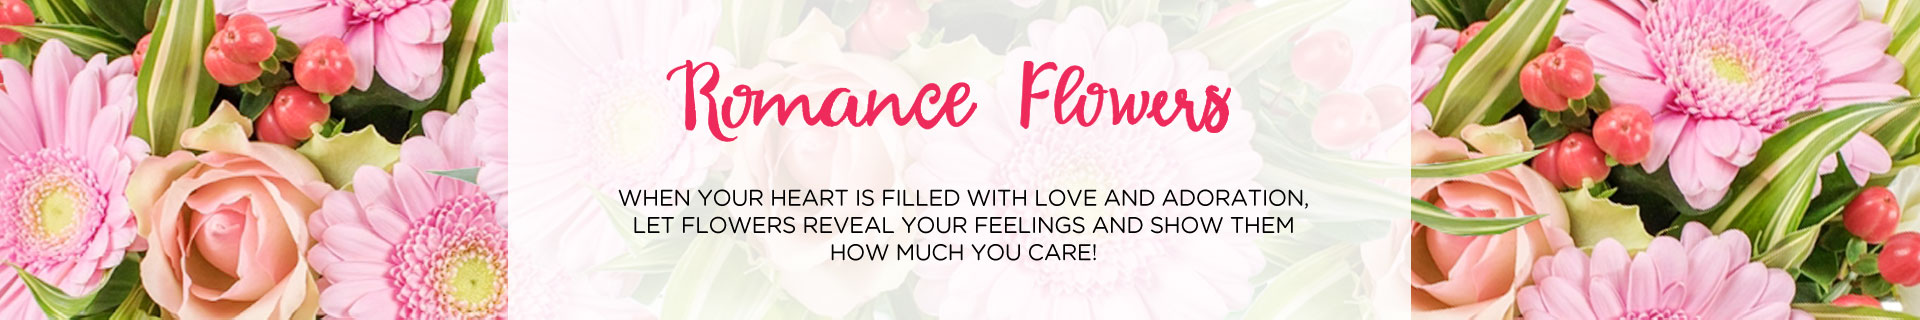 romance_flowers_banner.jpg